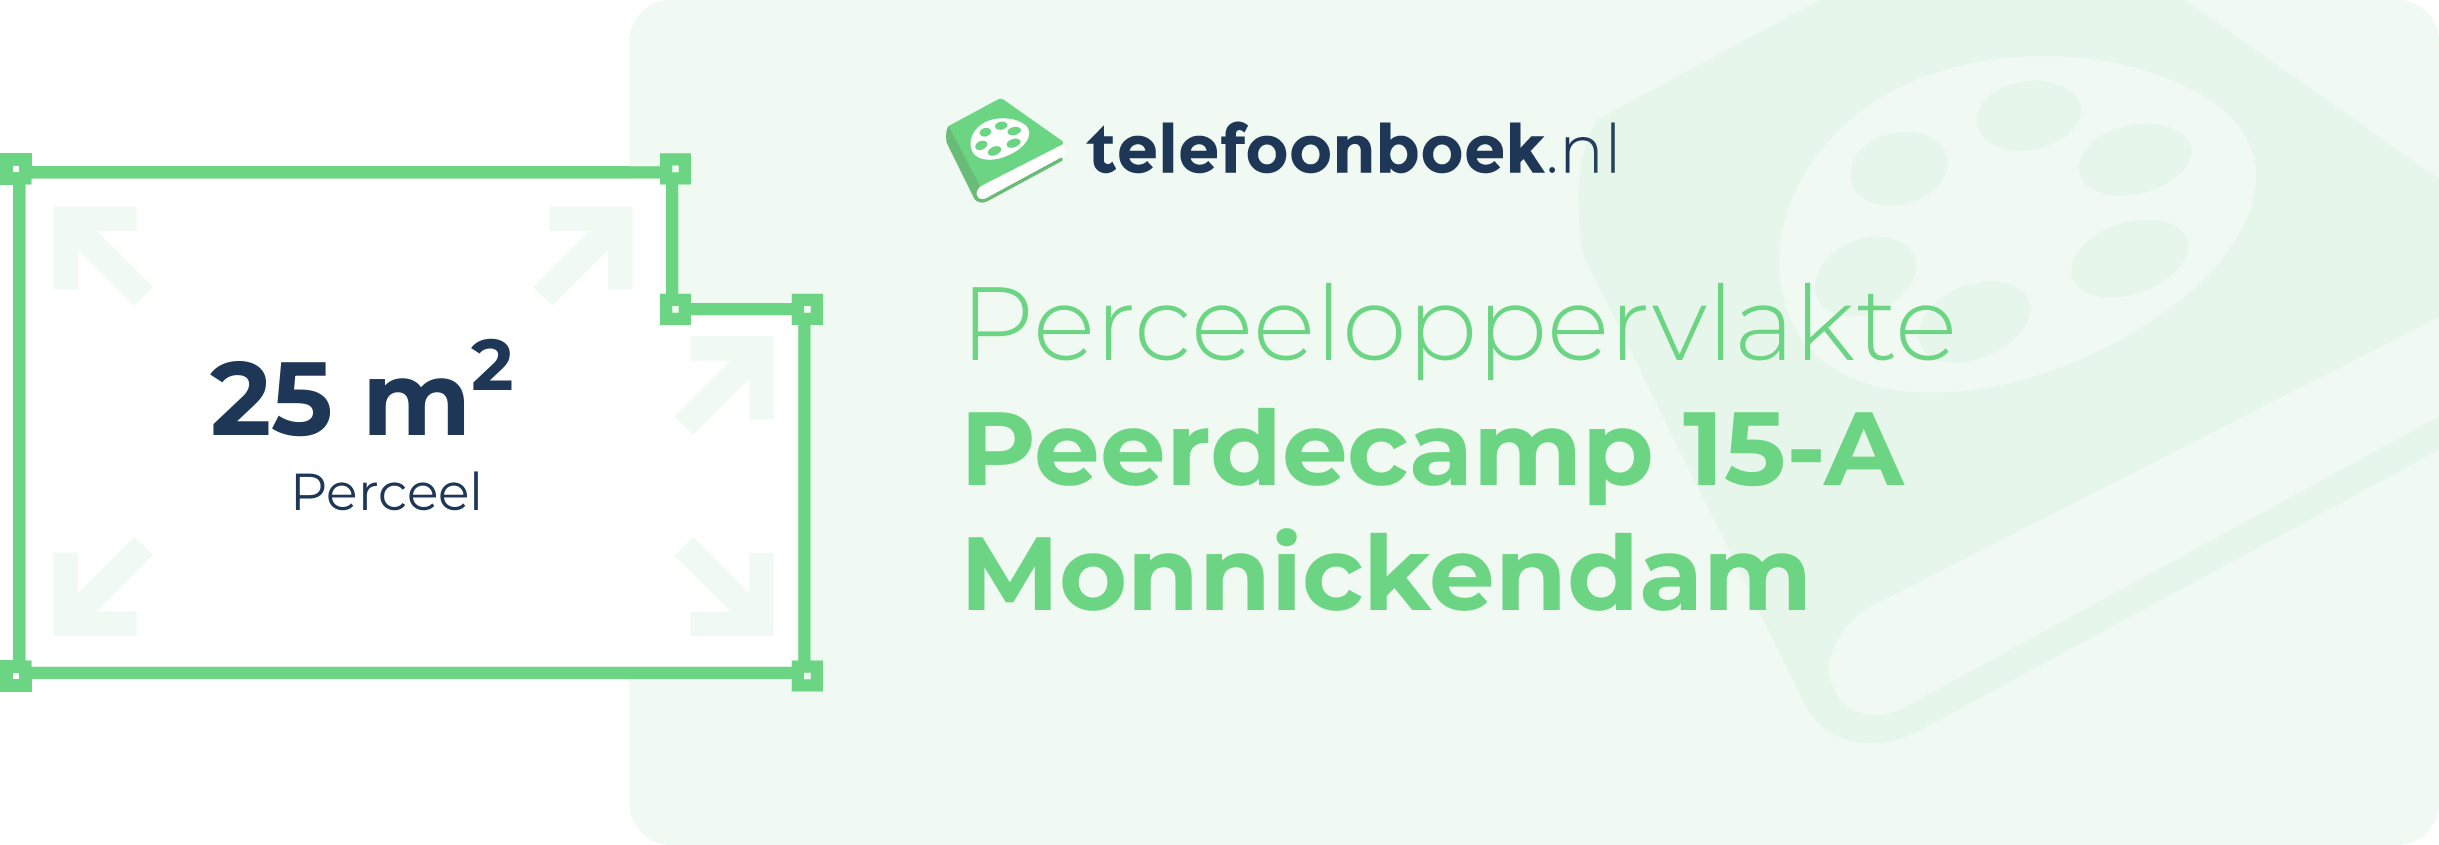 Perceeloppervlakte Peerdecamp 15-A Monnickendam